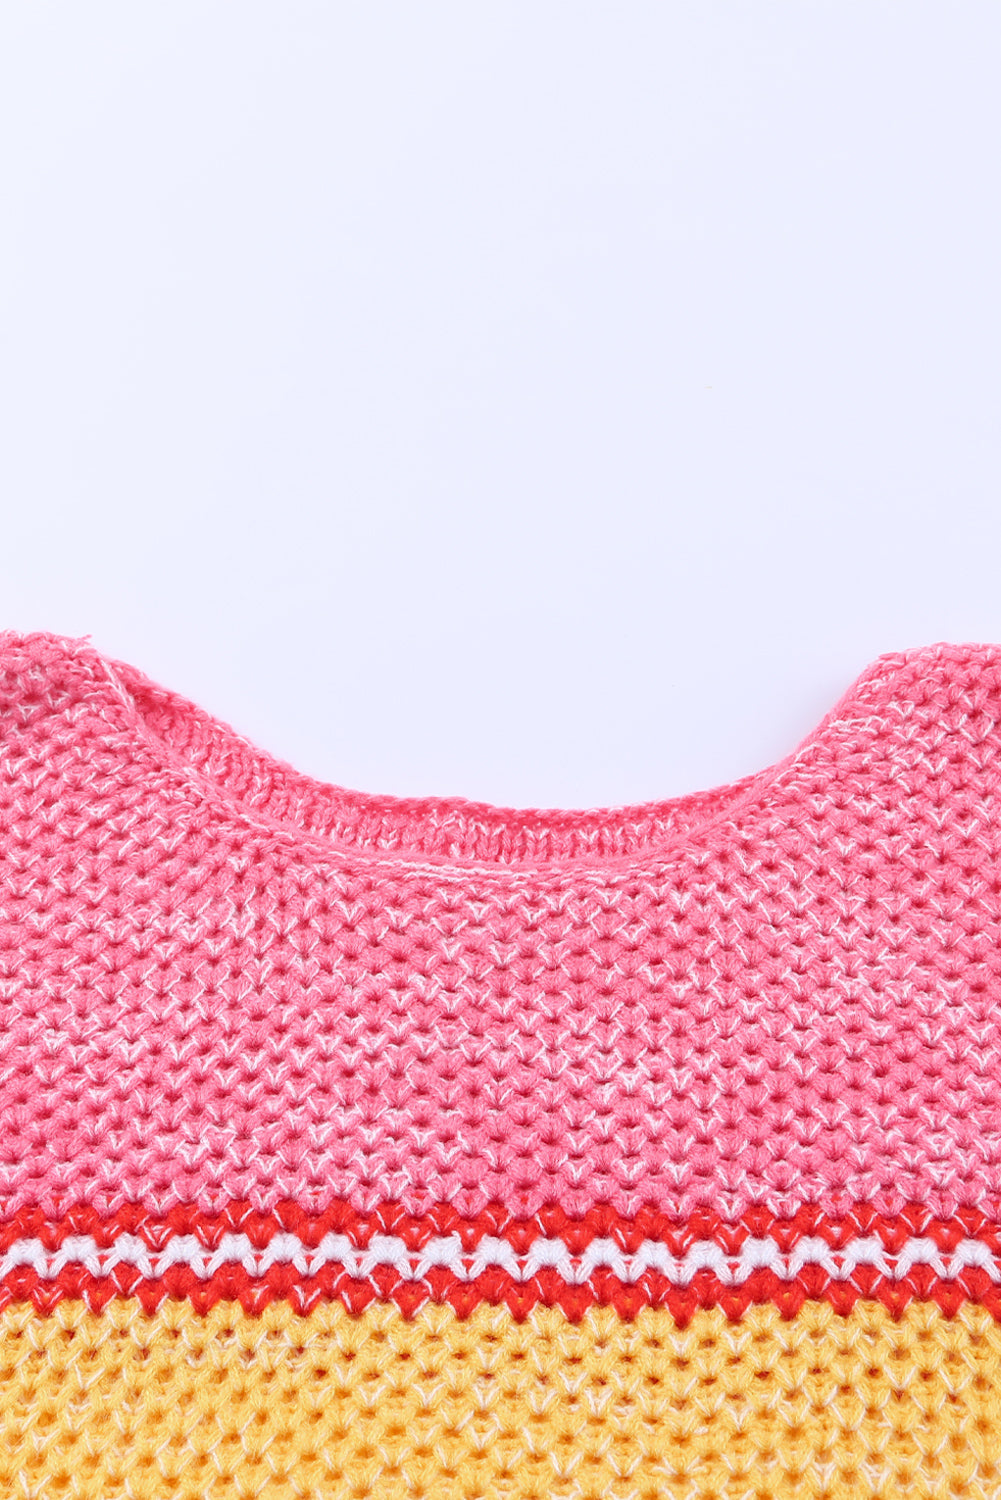 Rosafarbener, gestreifter Oversize-Pullover in Übergröße